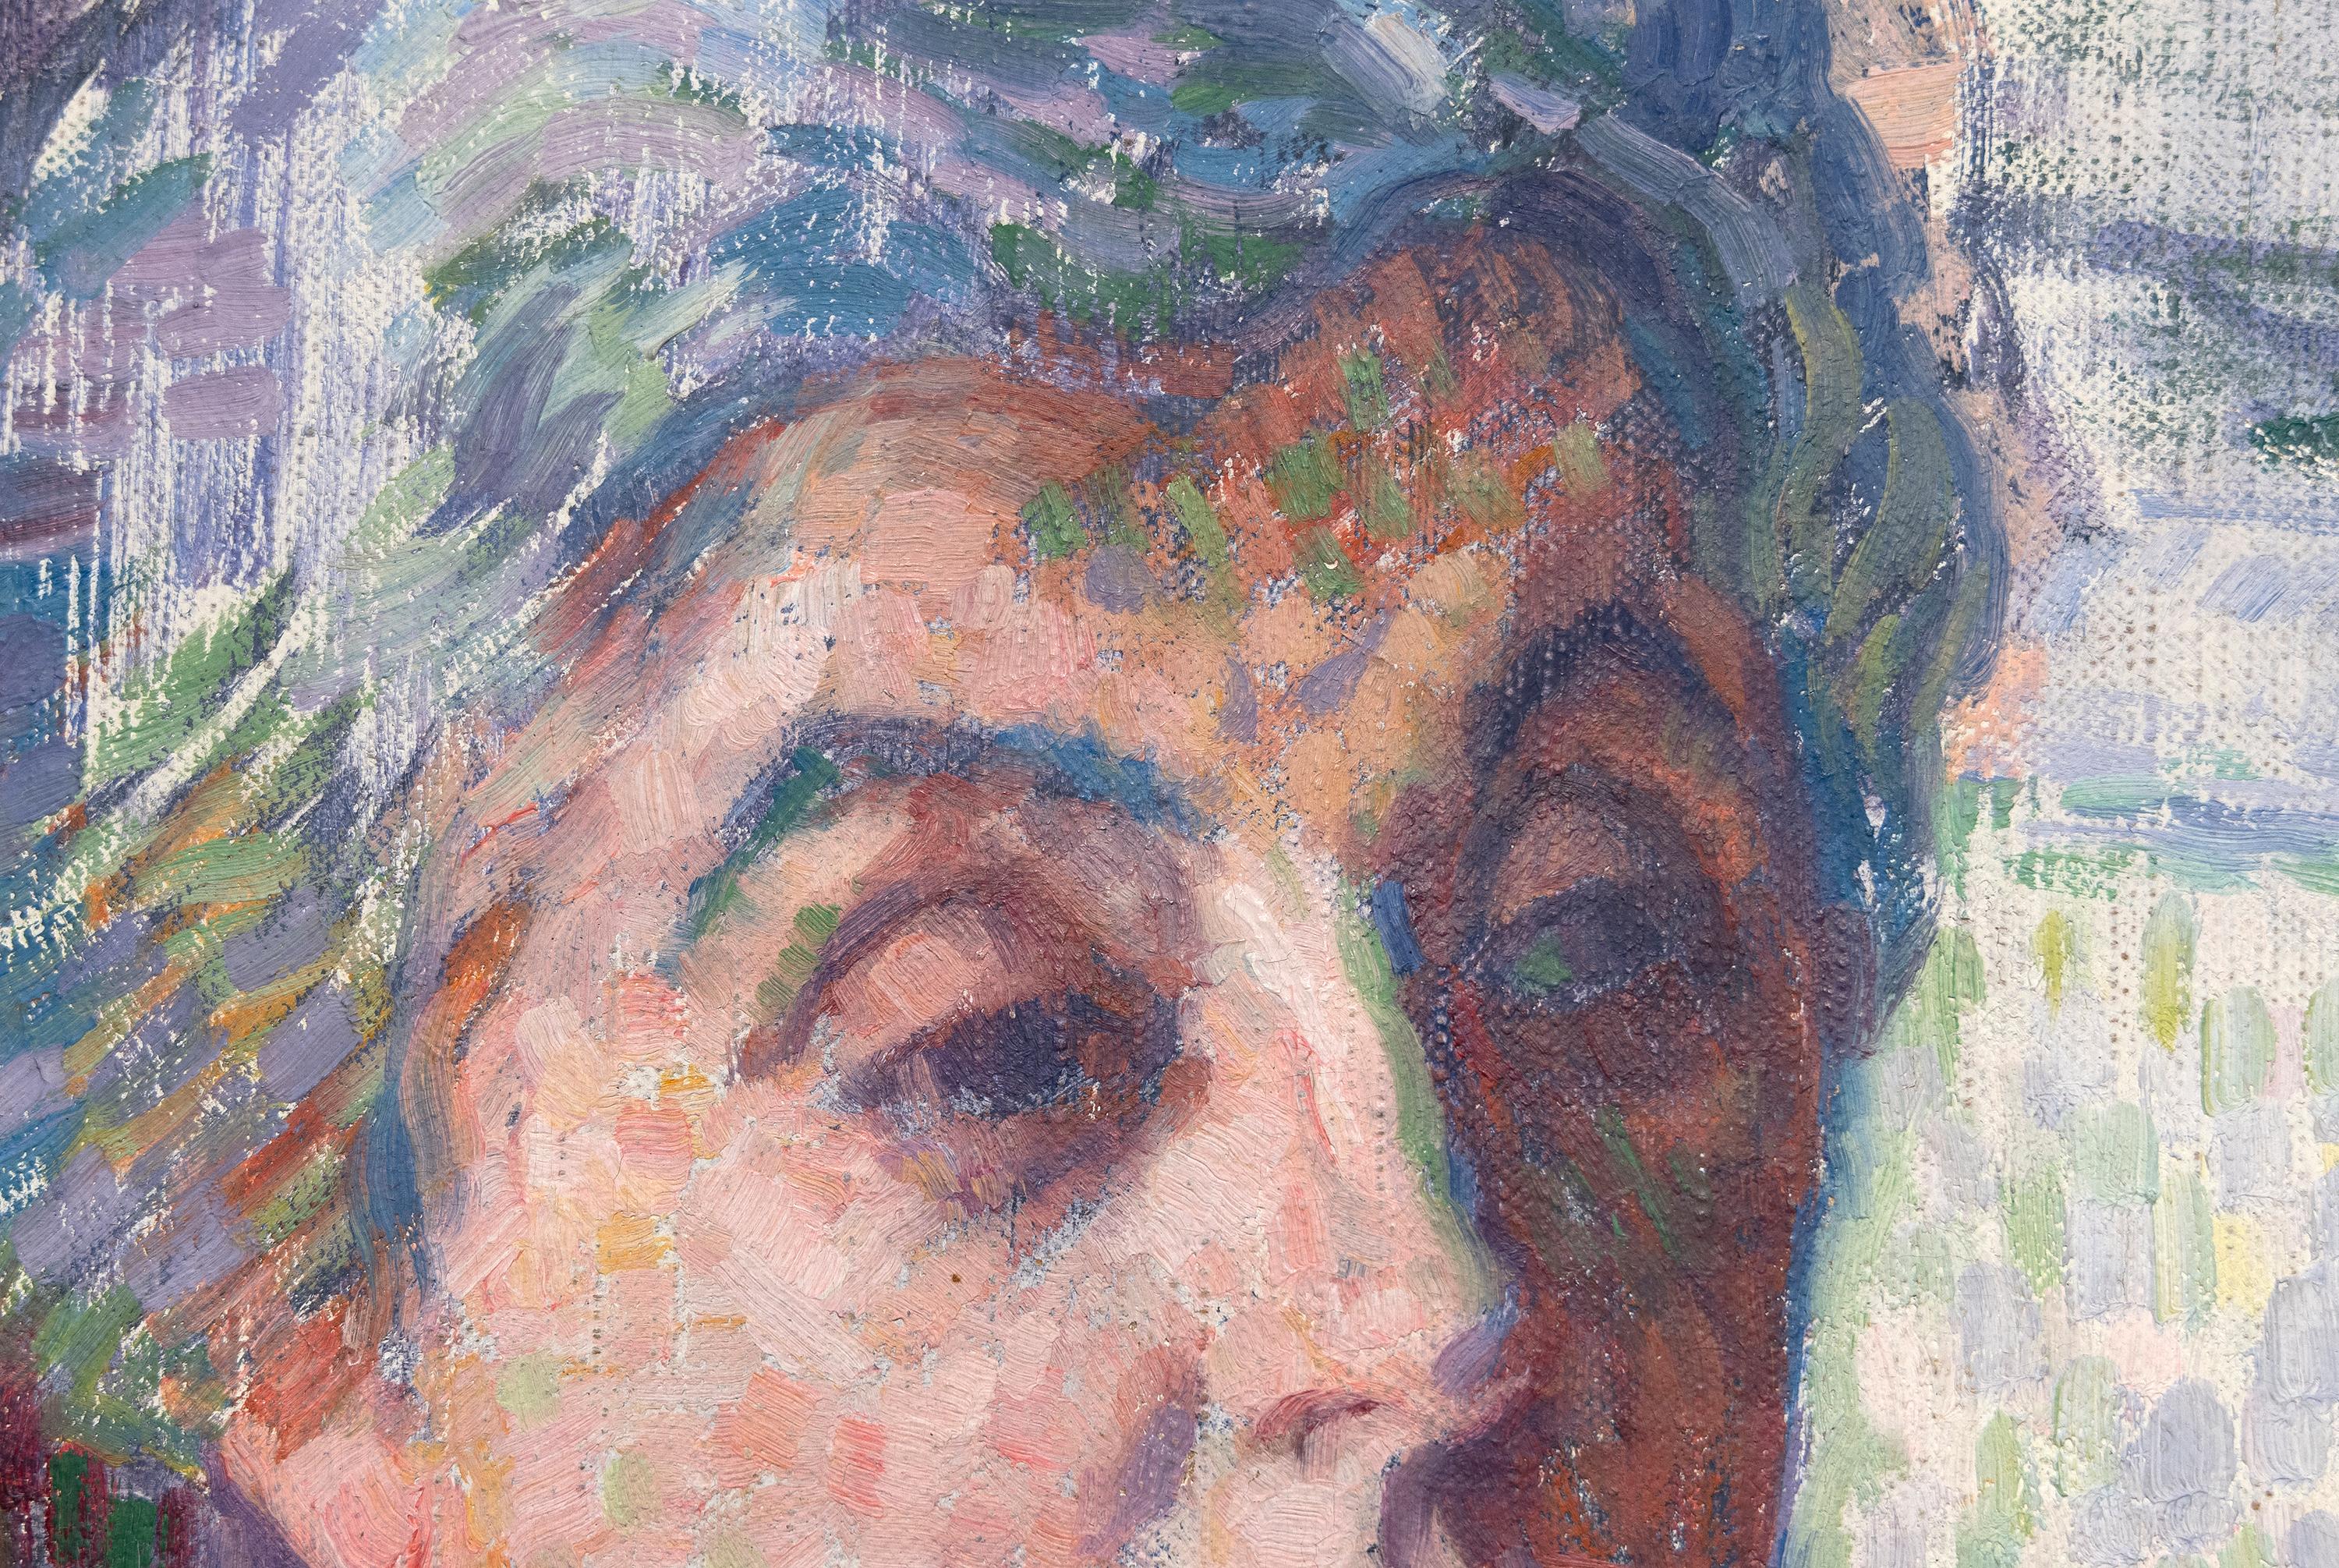 Maria Van Rysselberghe au coin du feu - Post-Impressionist Painting by Theo van Rysselberghe